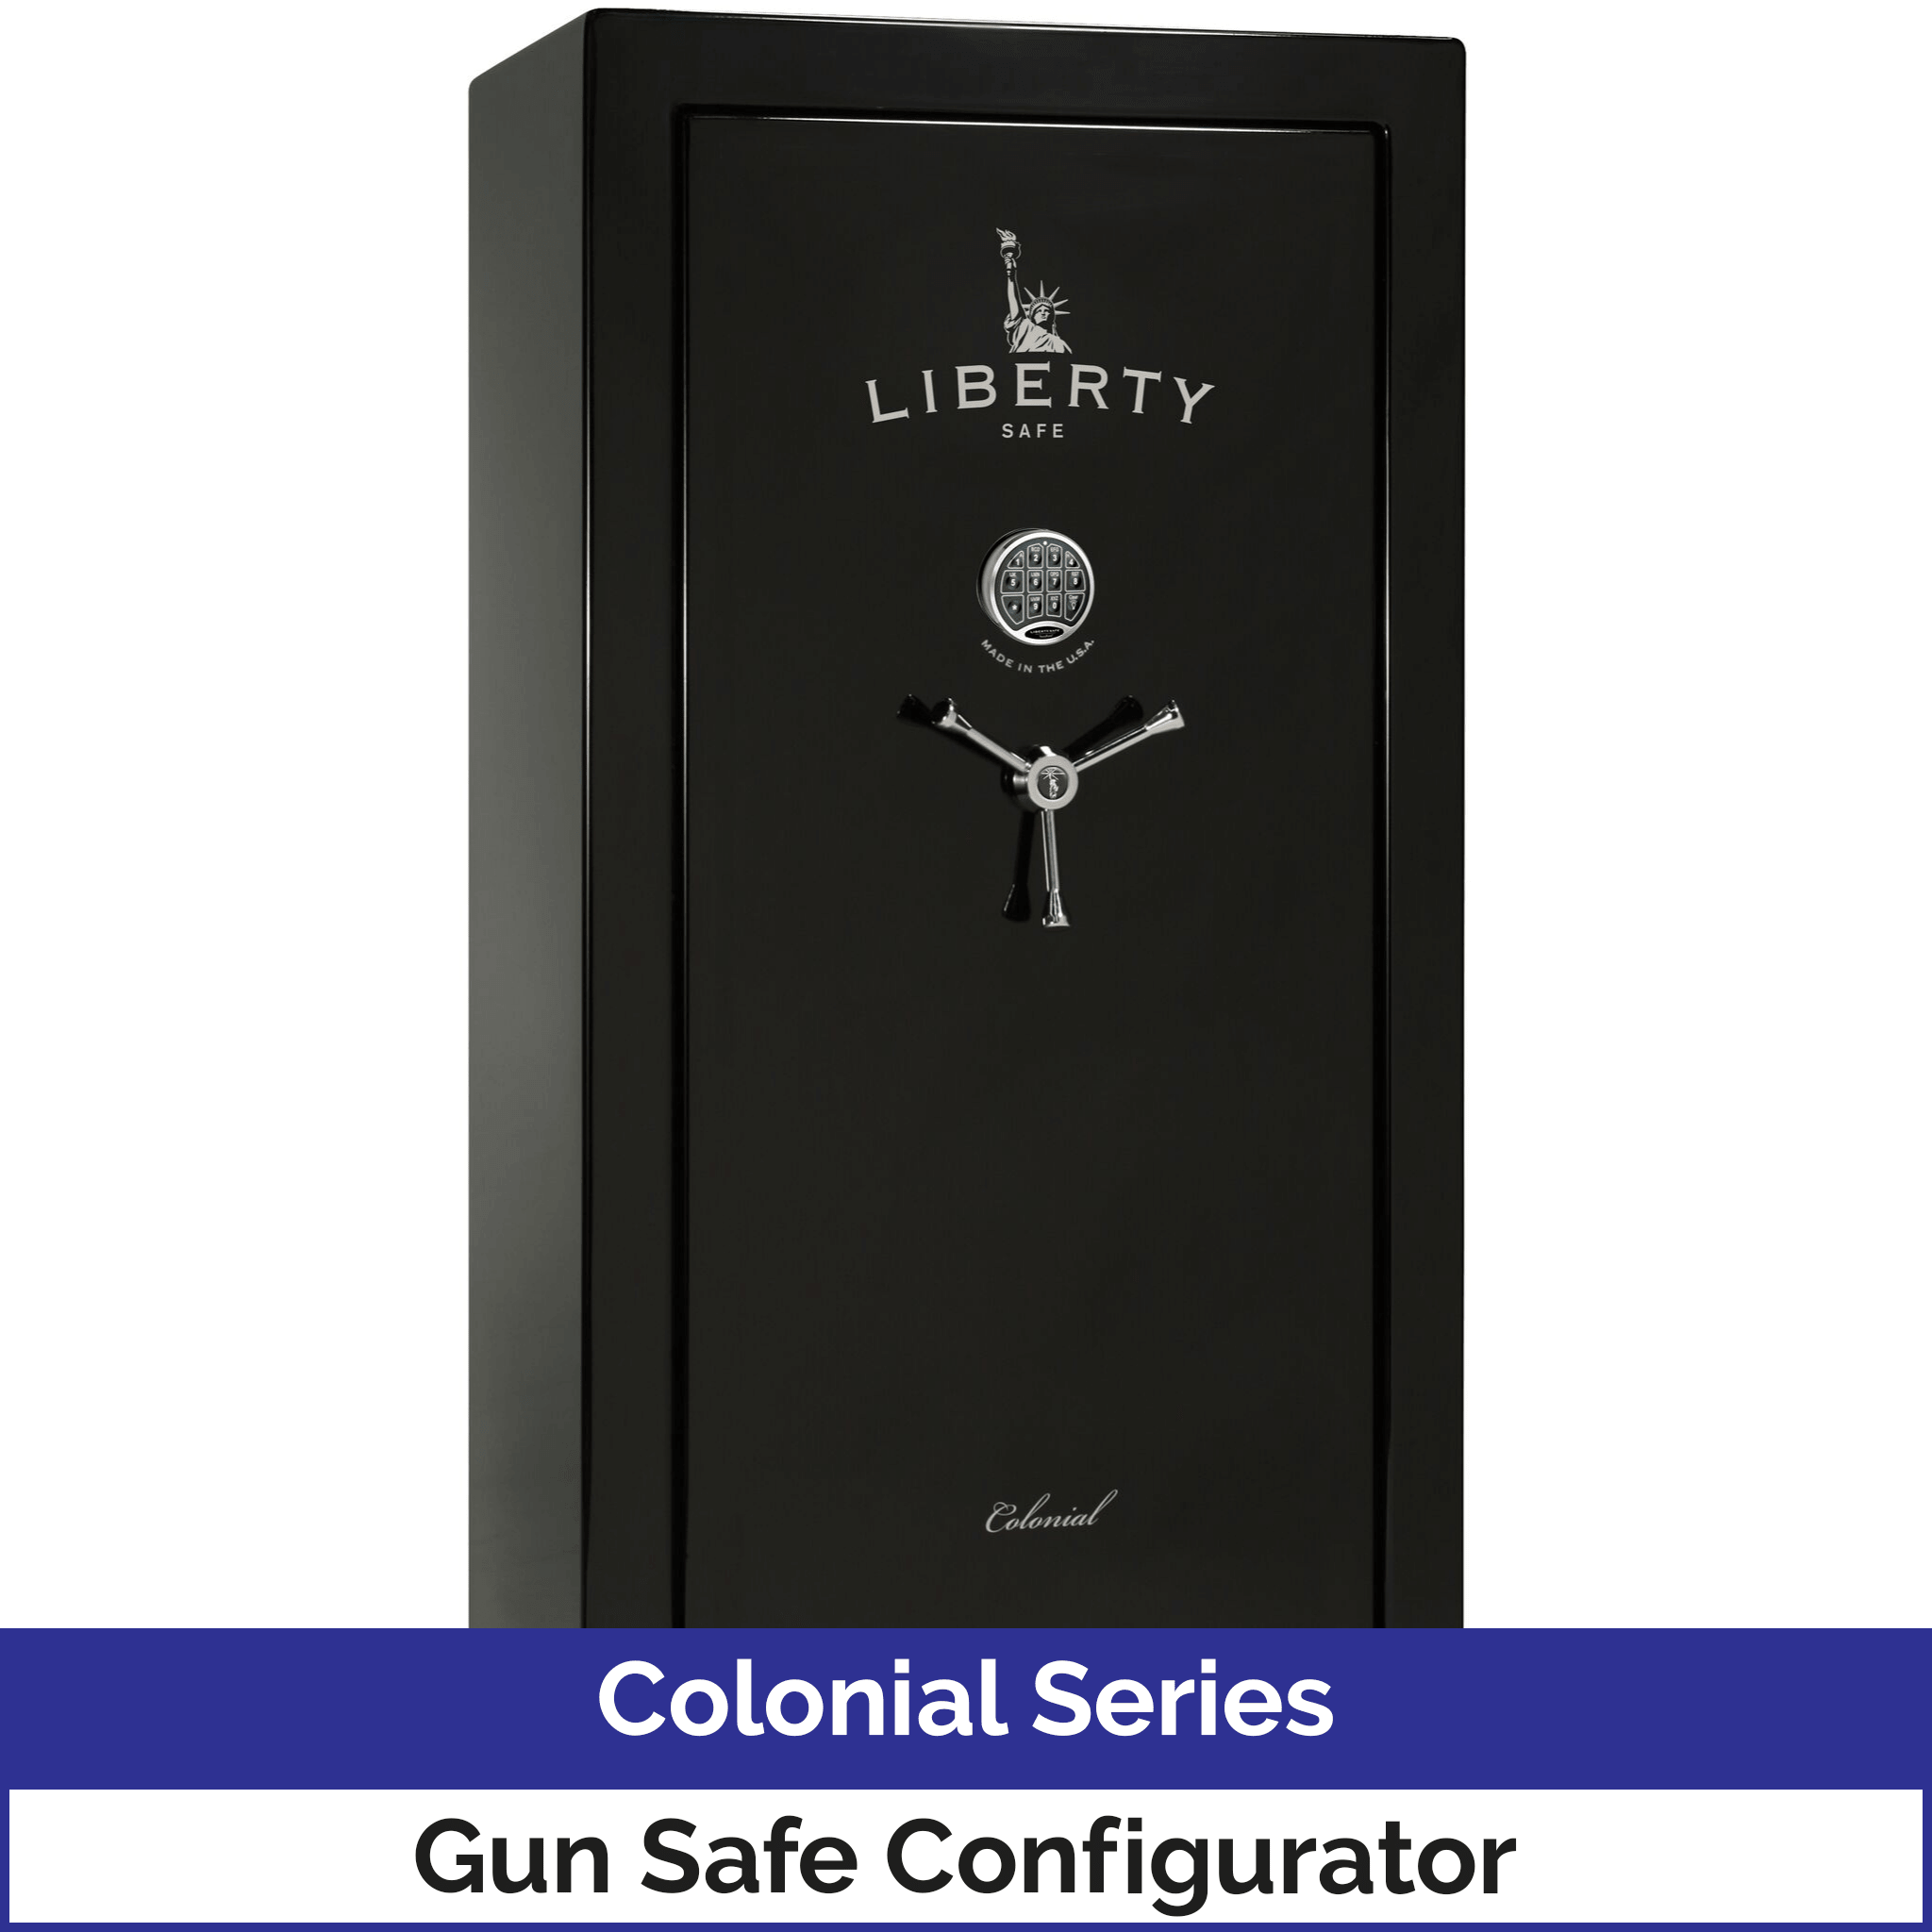 Liberty Colonial Series Gun Safe Configurator, image 1 